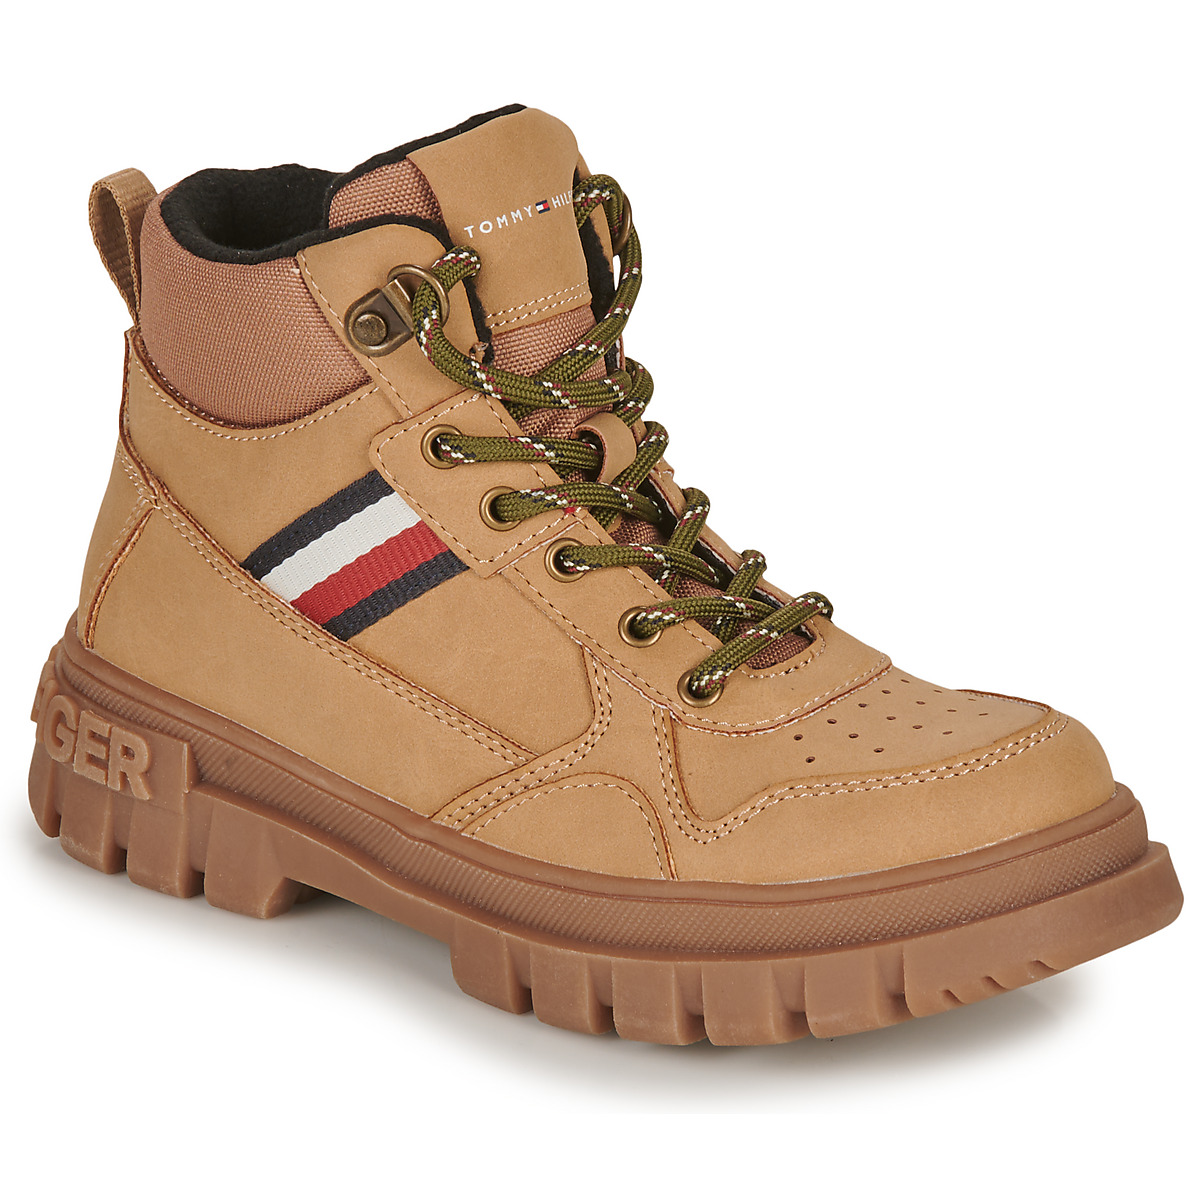 Chaussures Garçon Tommy Boot Hilfiger Poppy Crossover Corp T3B5-33157-0316524 Camel